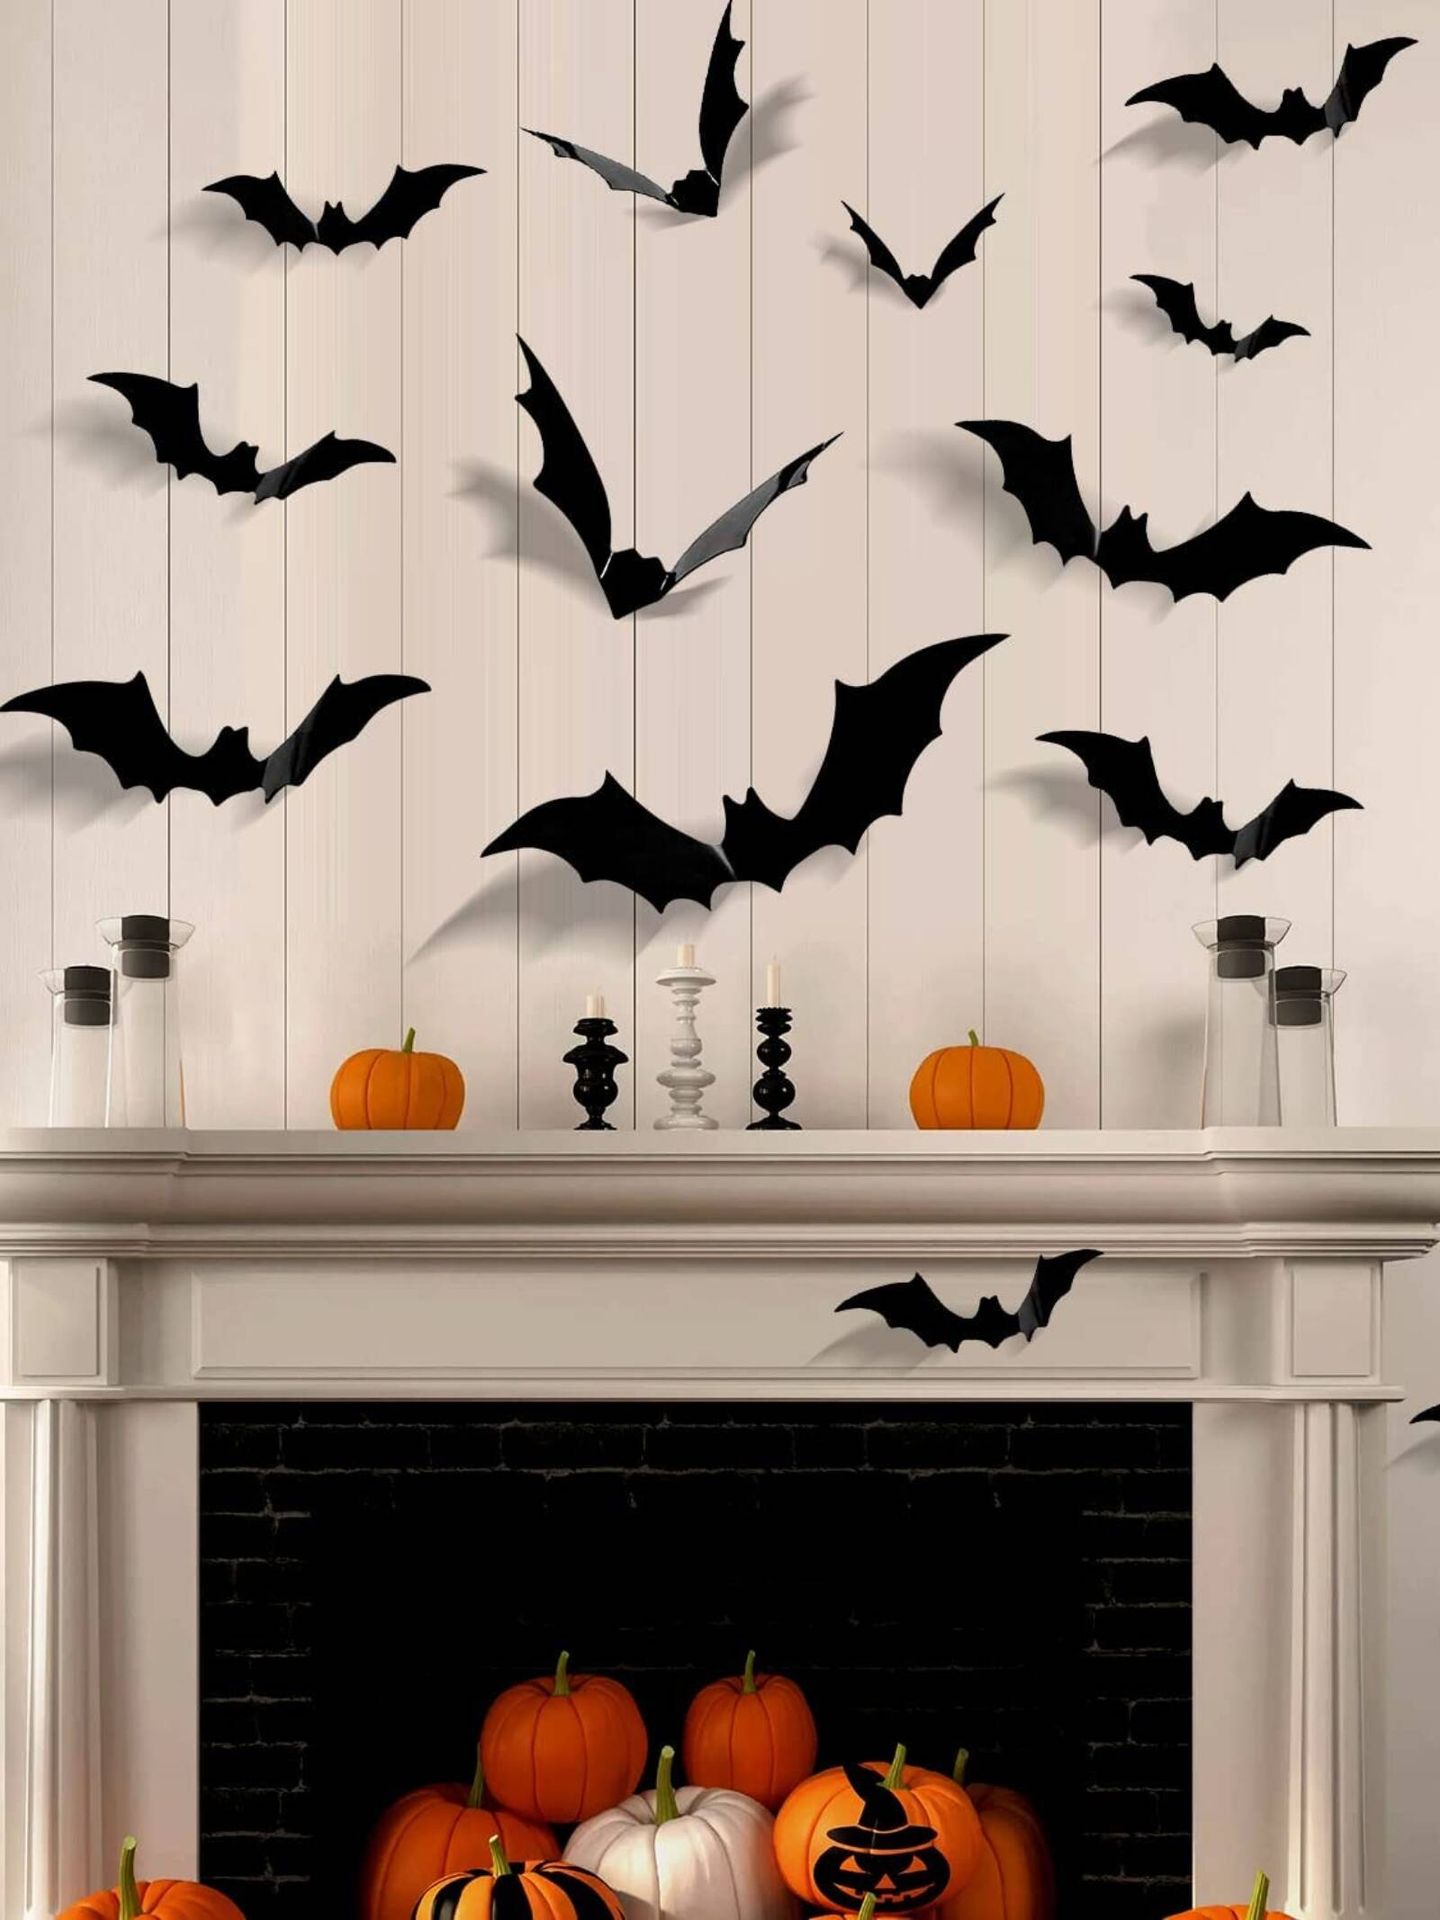 Decoración para celebrar Halloween en casa. (Cortesía/Amazon)